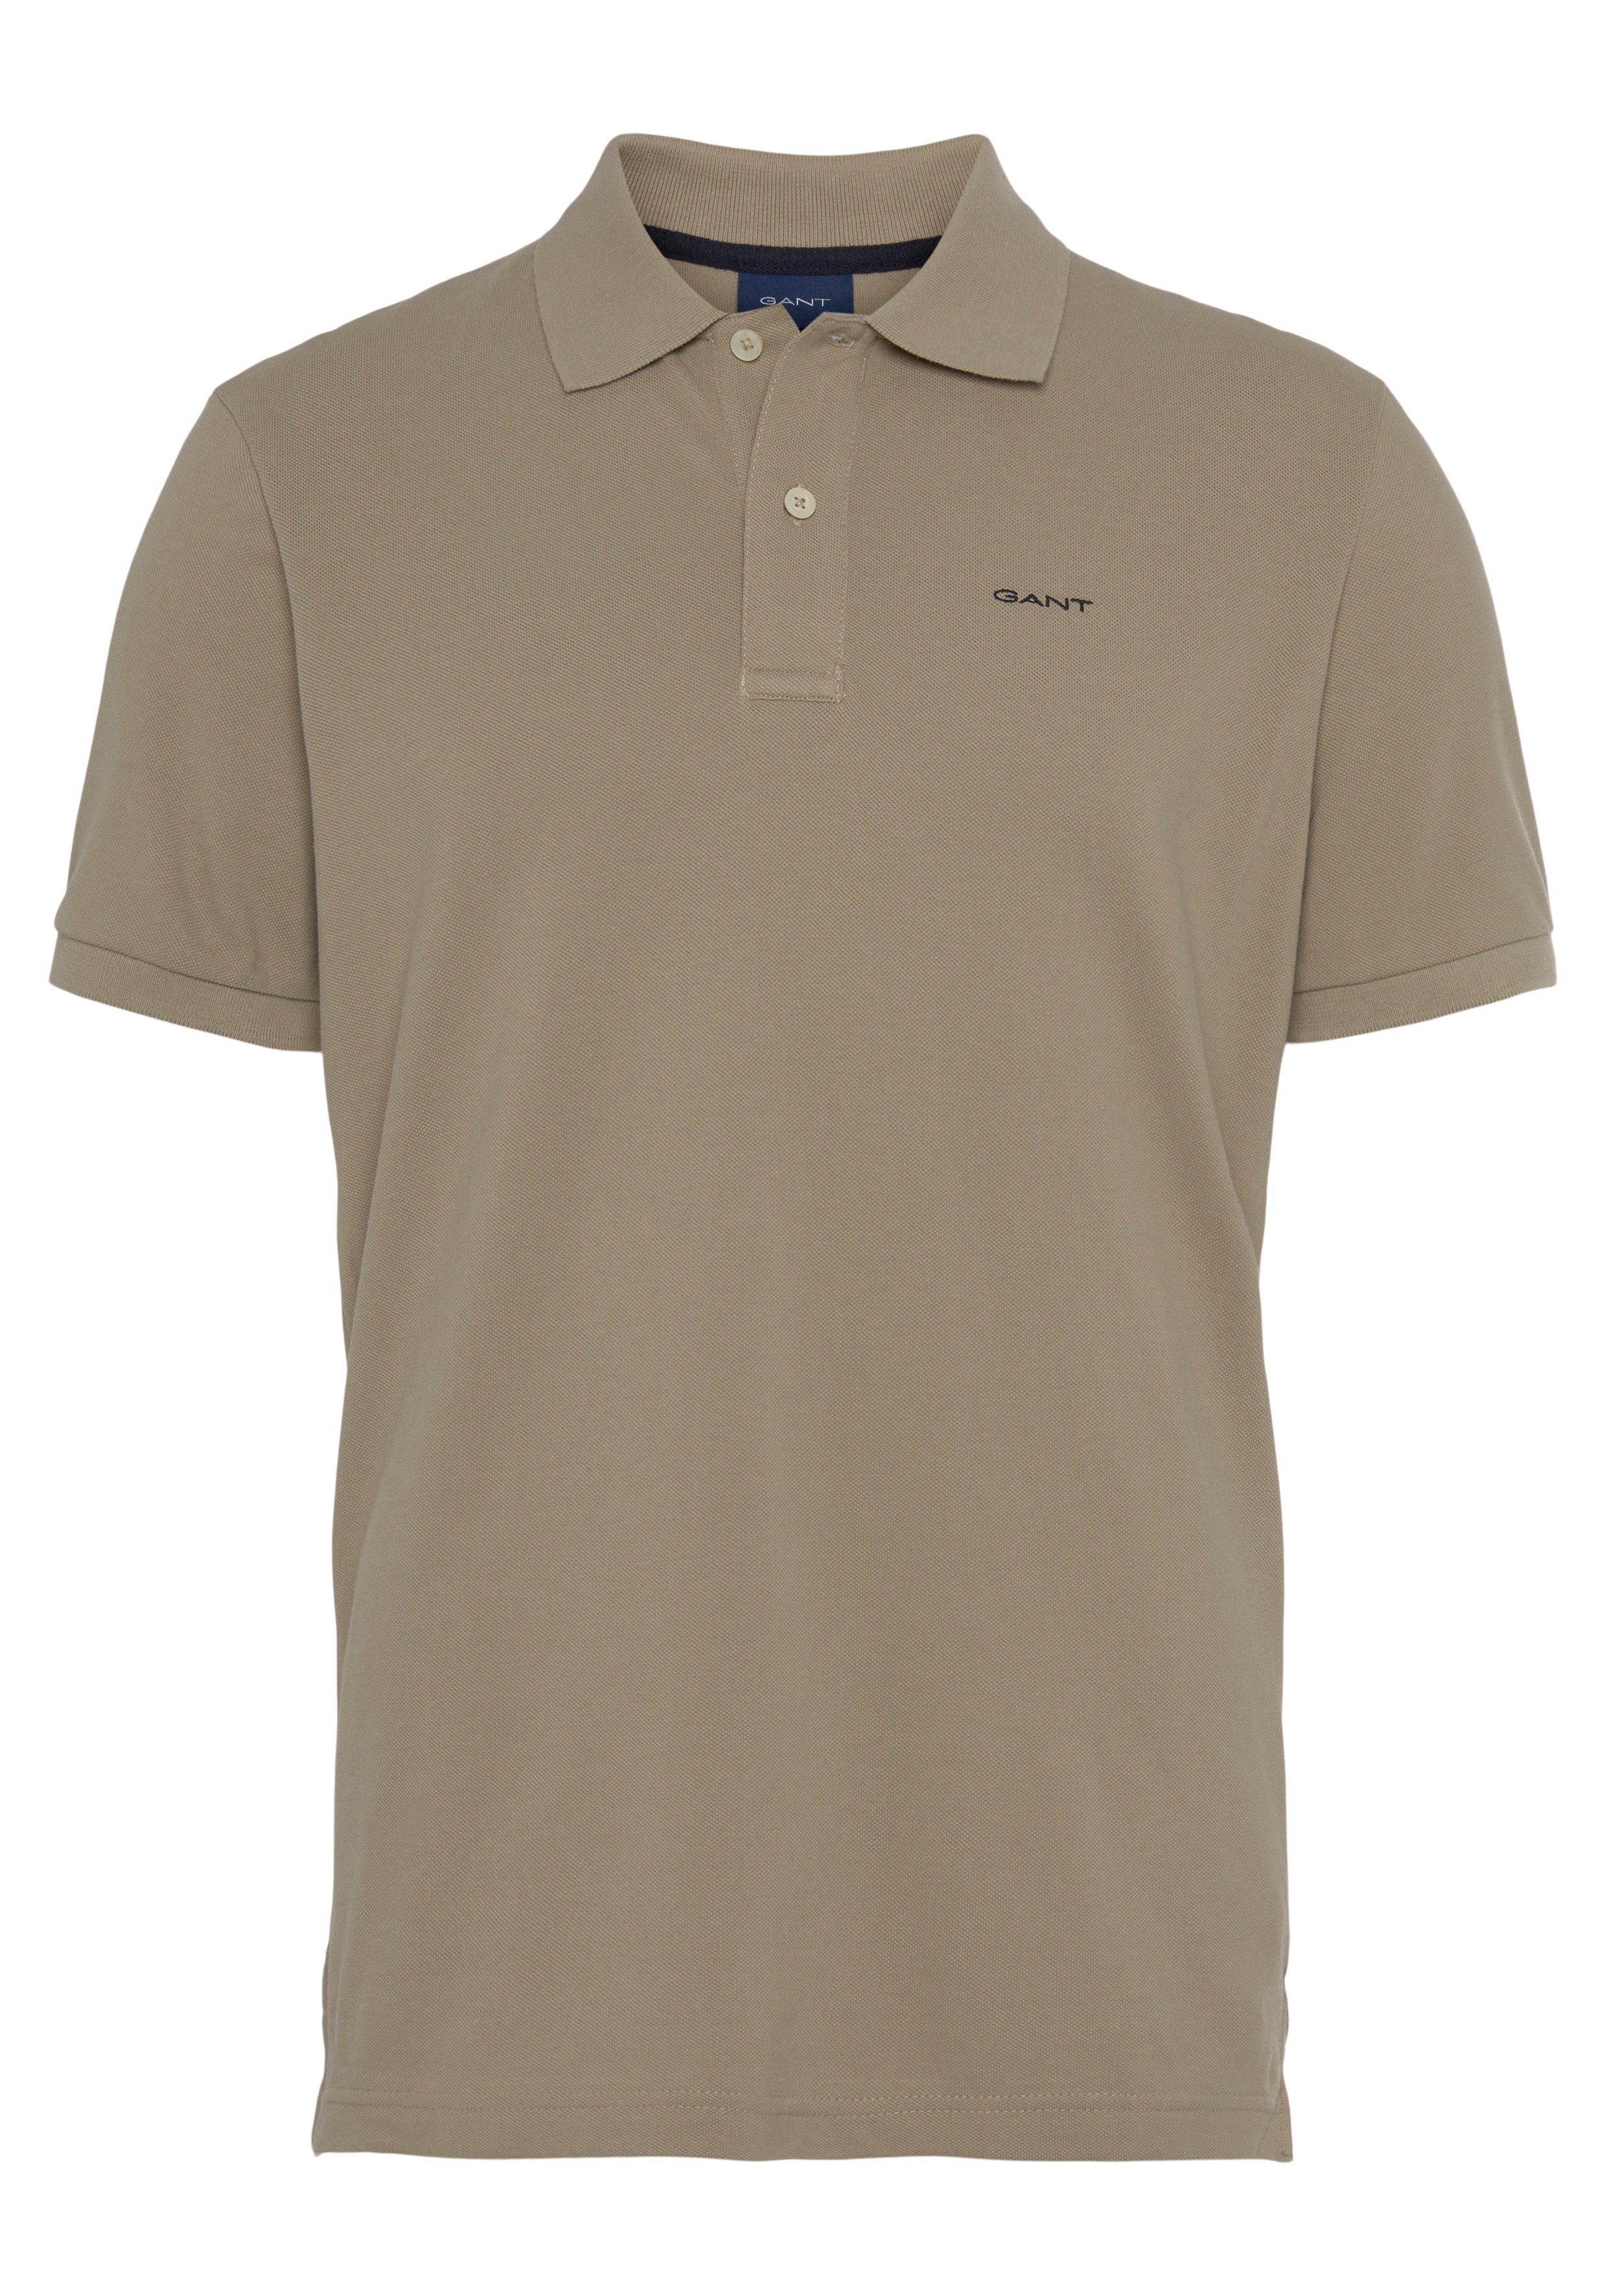 Qualität Shirt, conc.beige Gant PIQUE MD. Premium Casual, KA Regular Fit, Poloshirt Smart RUGGER Piqué-Polo